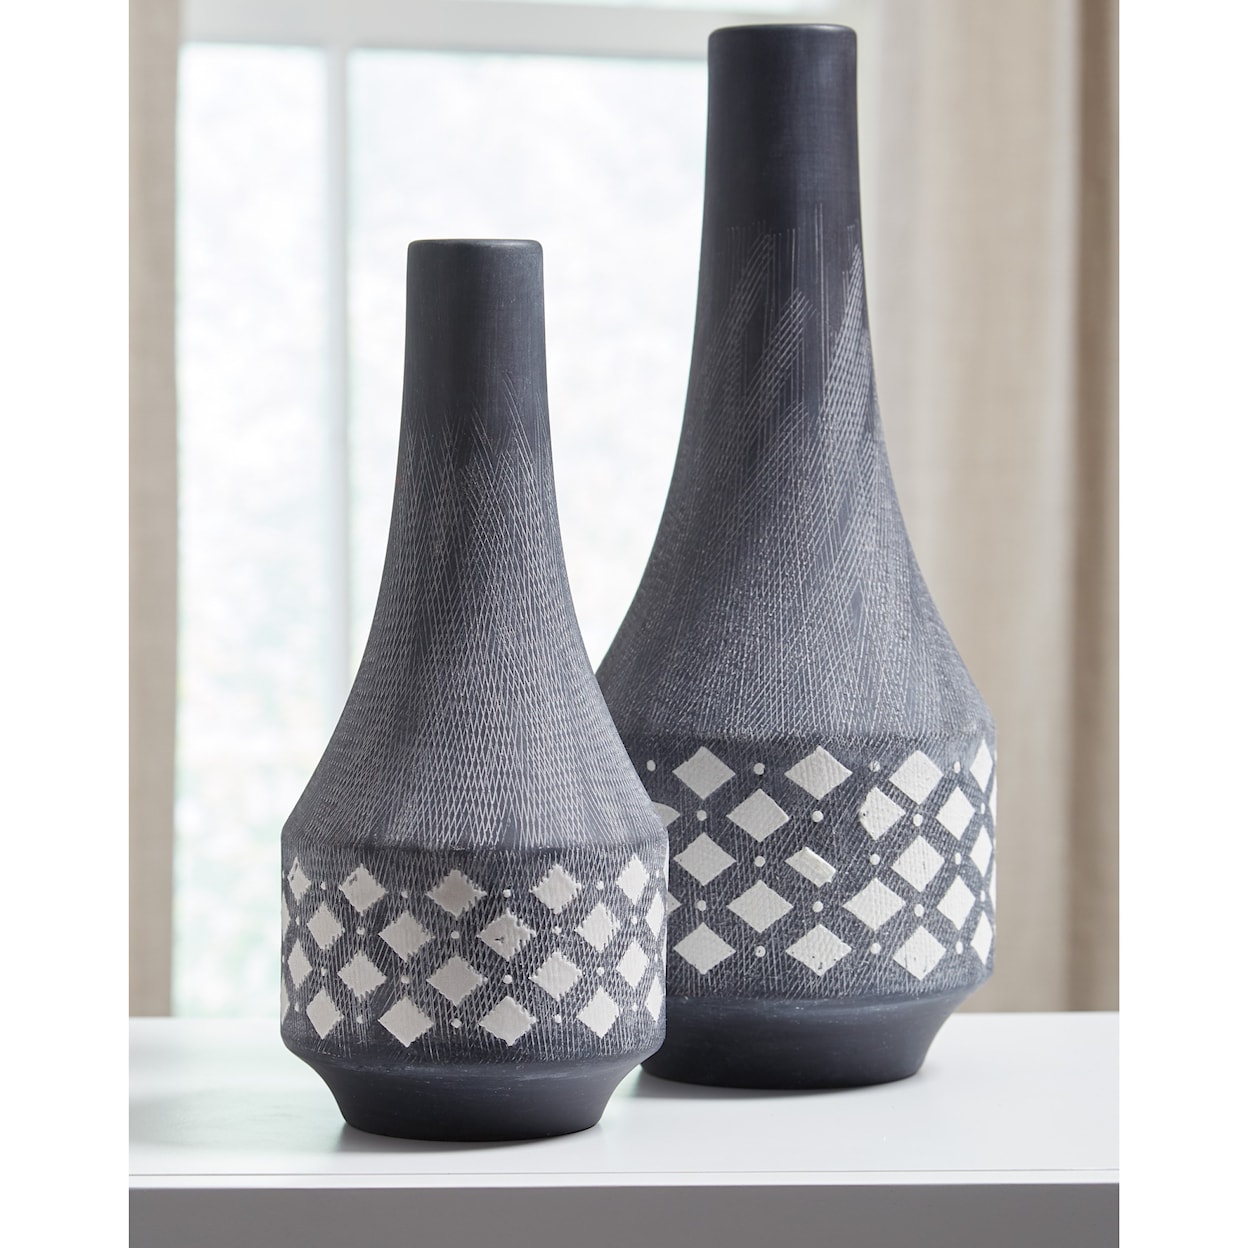 Ashley Furniture Signature Design Accents Dornitilla Black/White Vase Set